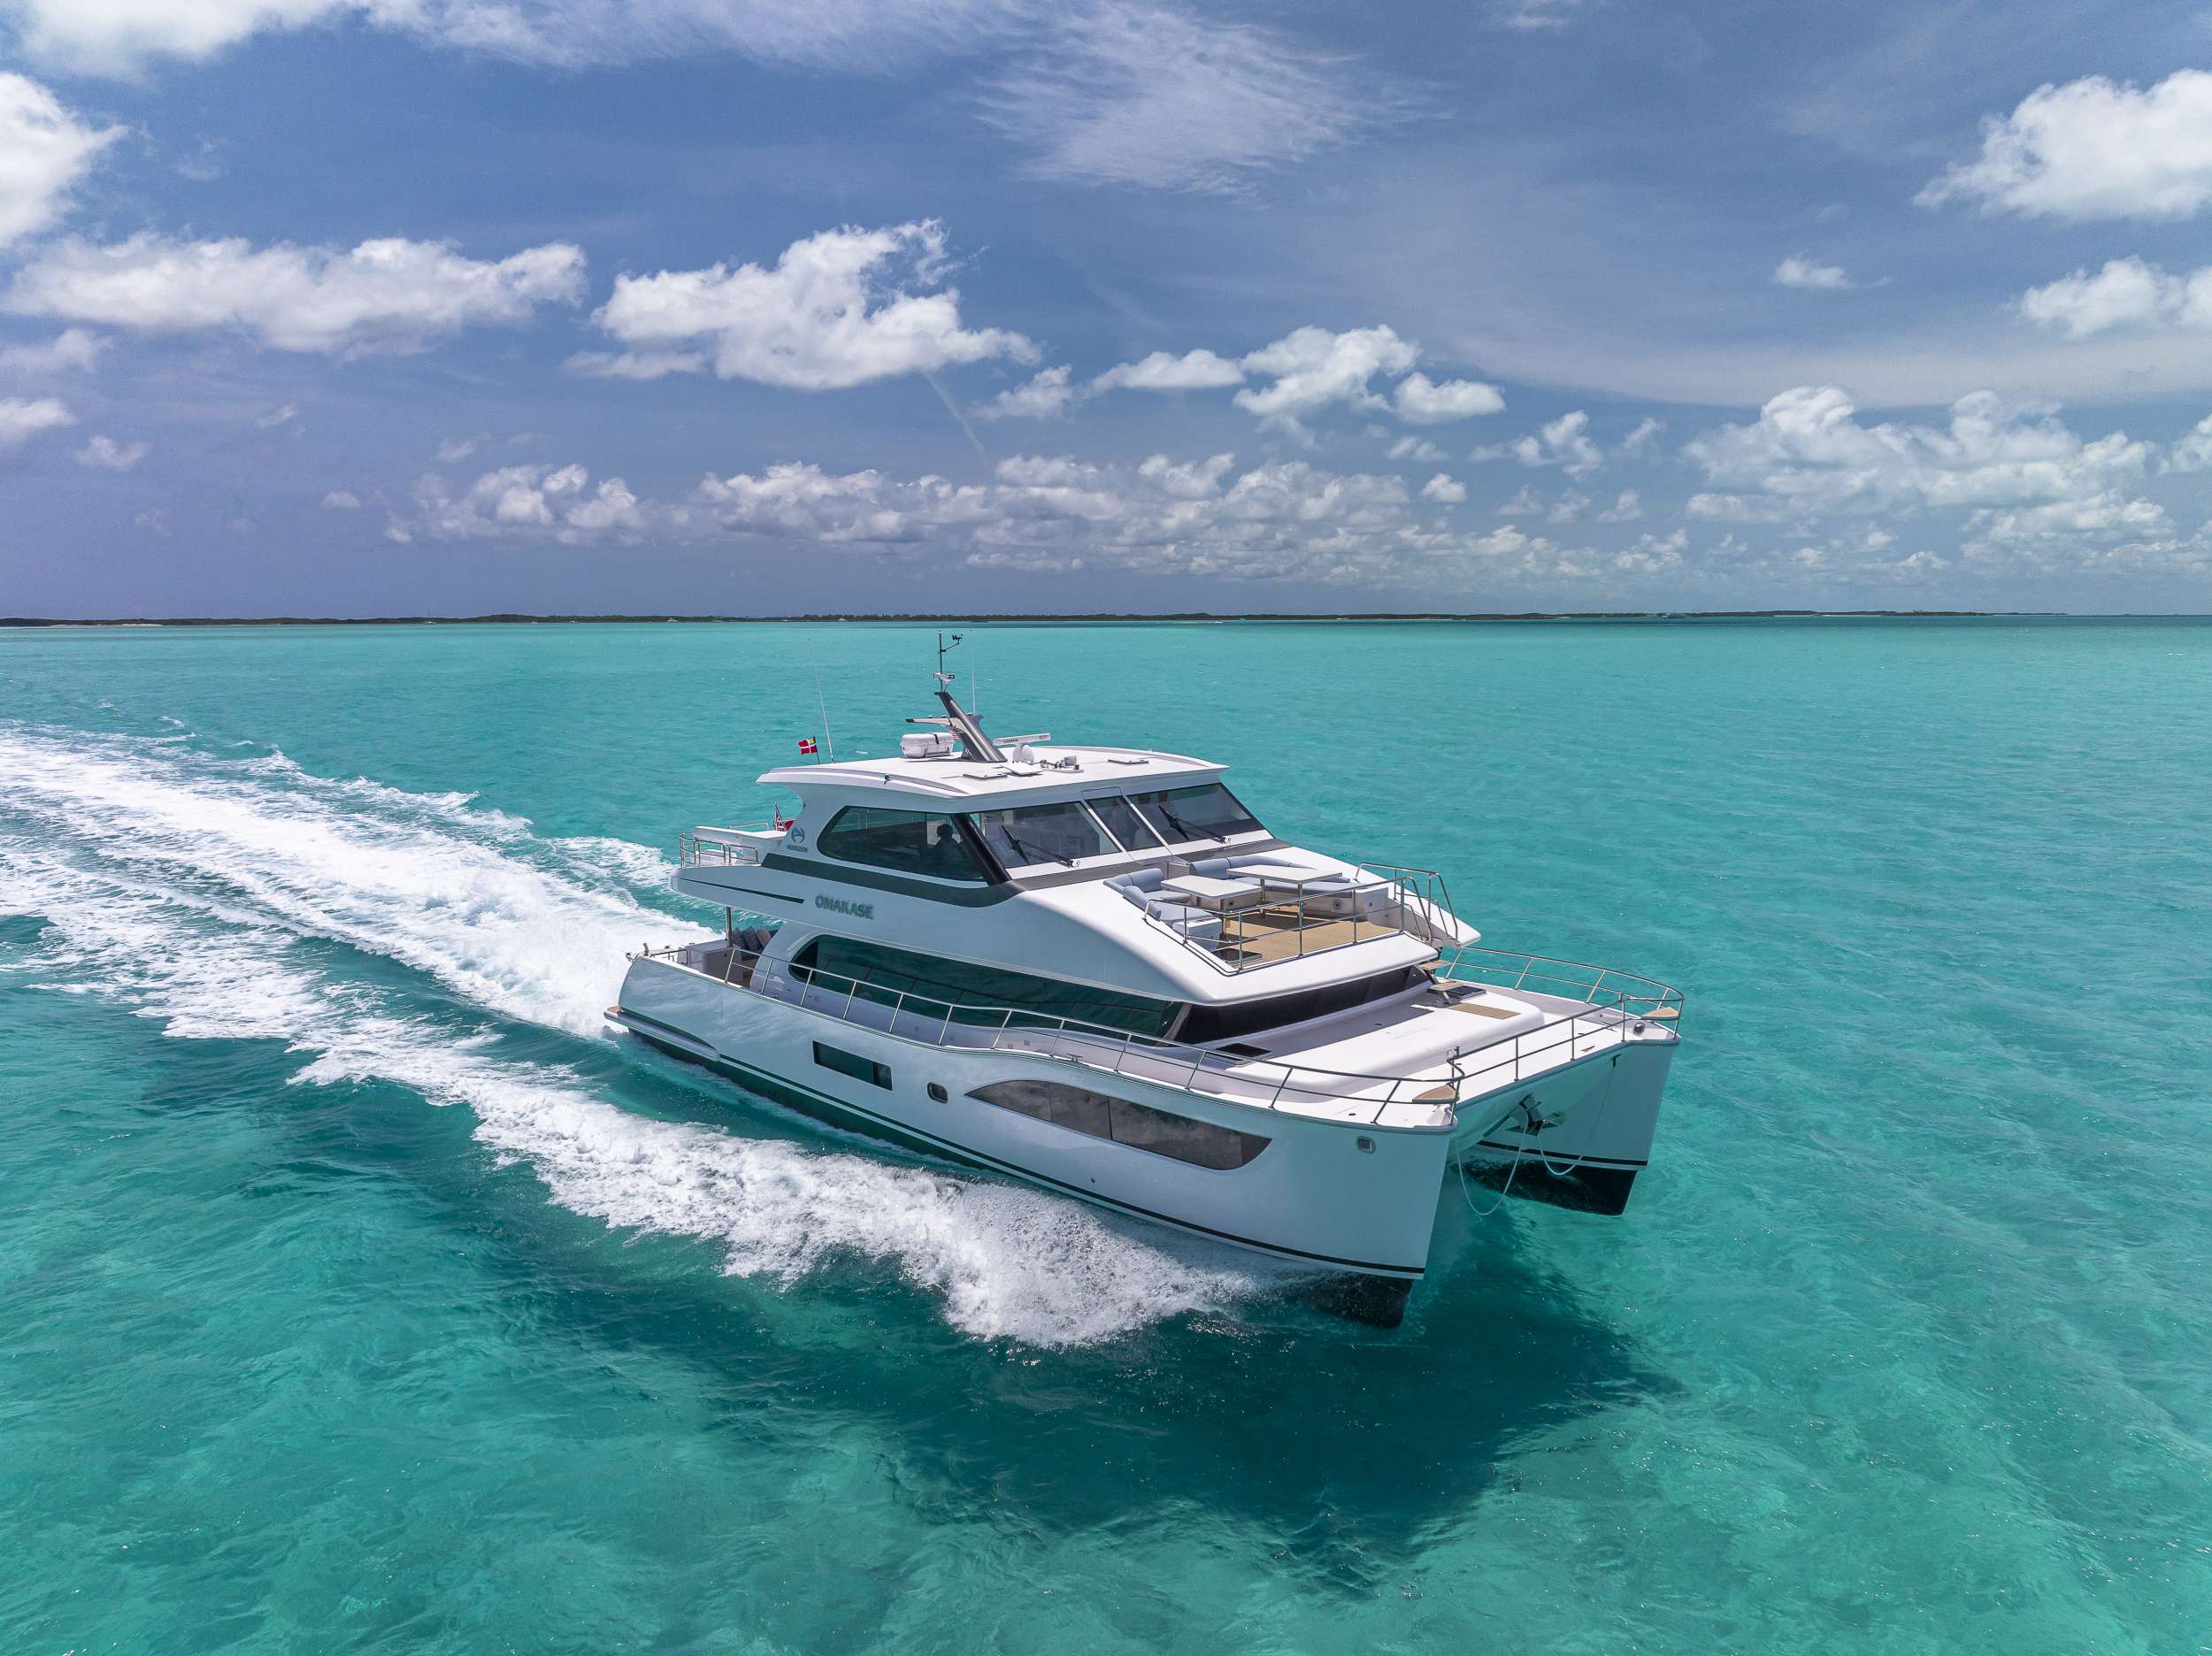 OMAKASE - Yacht Charter Netherlands Antilles & Boat hire in Bahamas & Caribbean 1